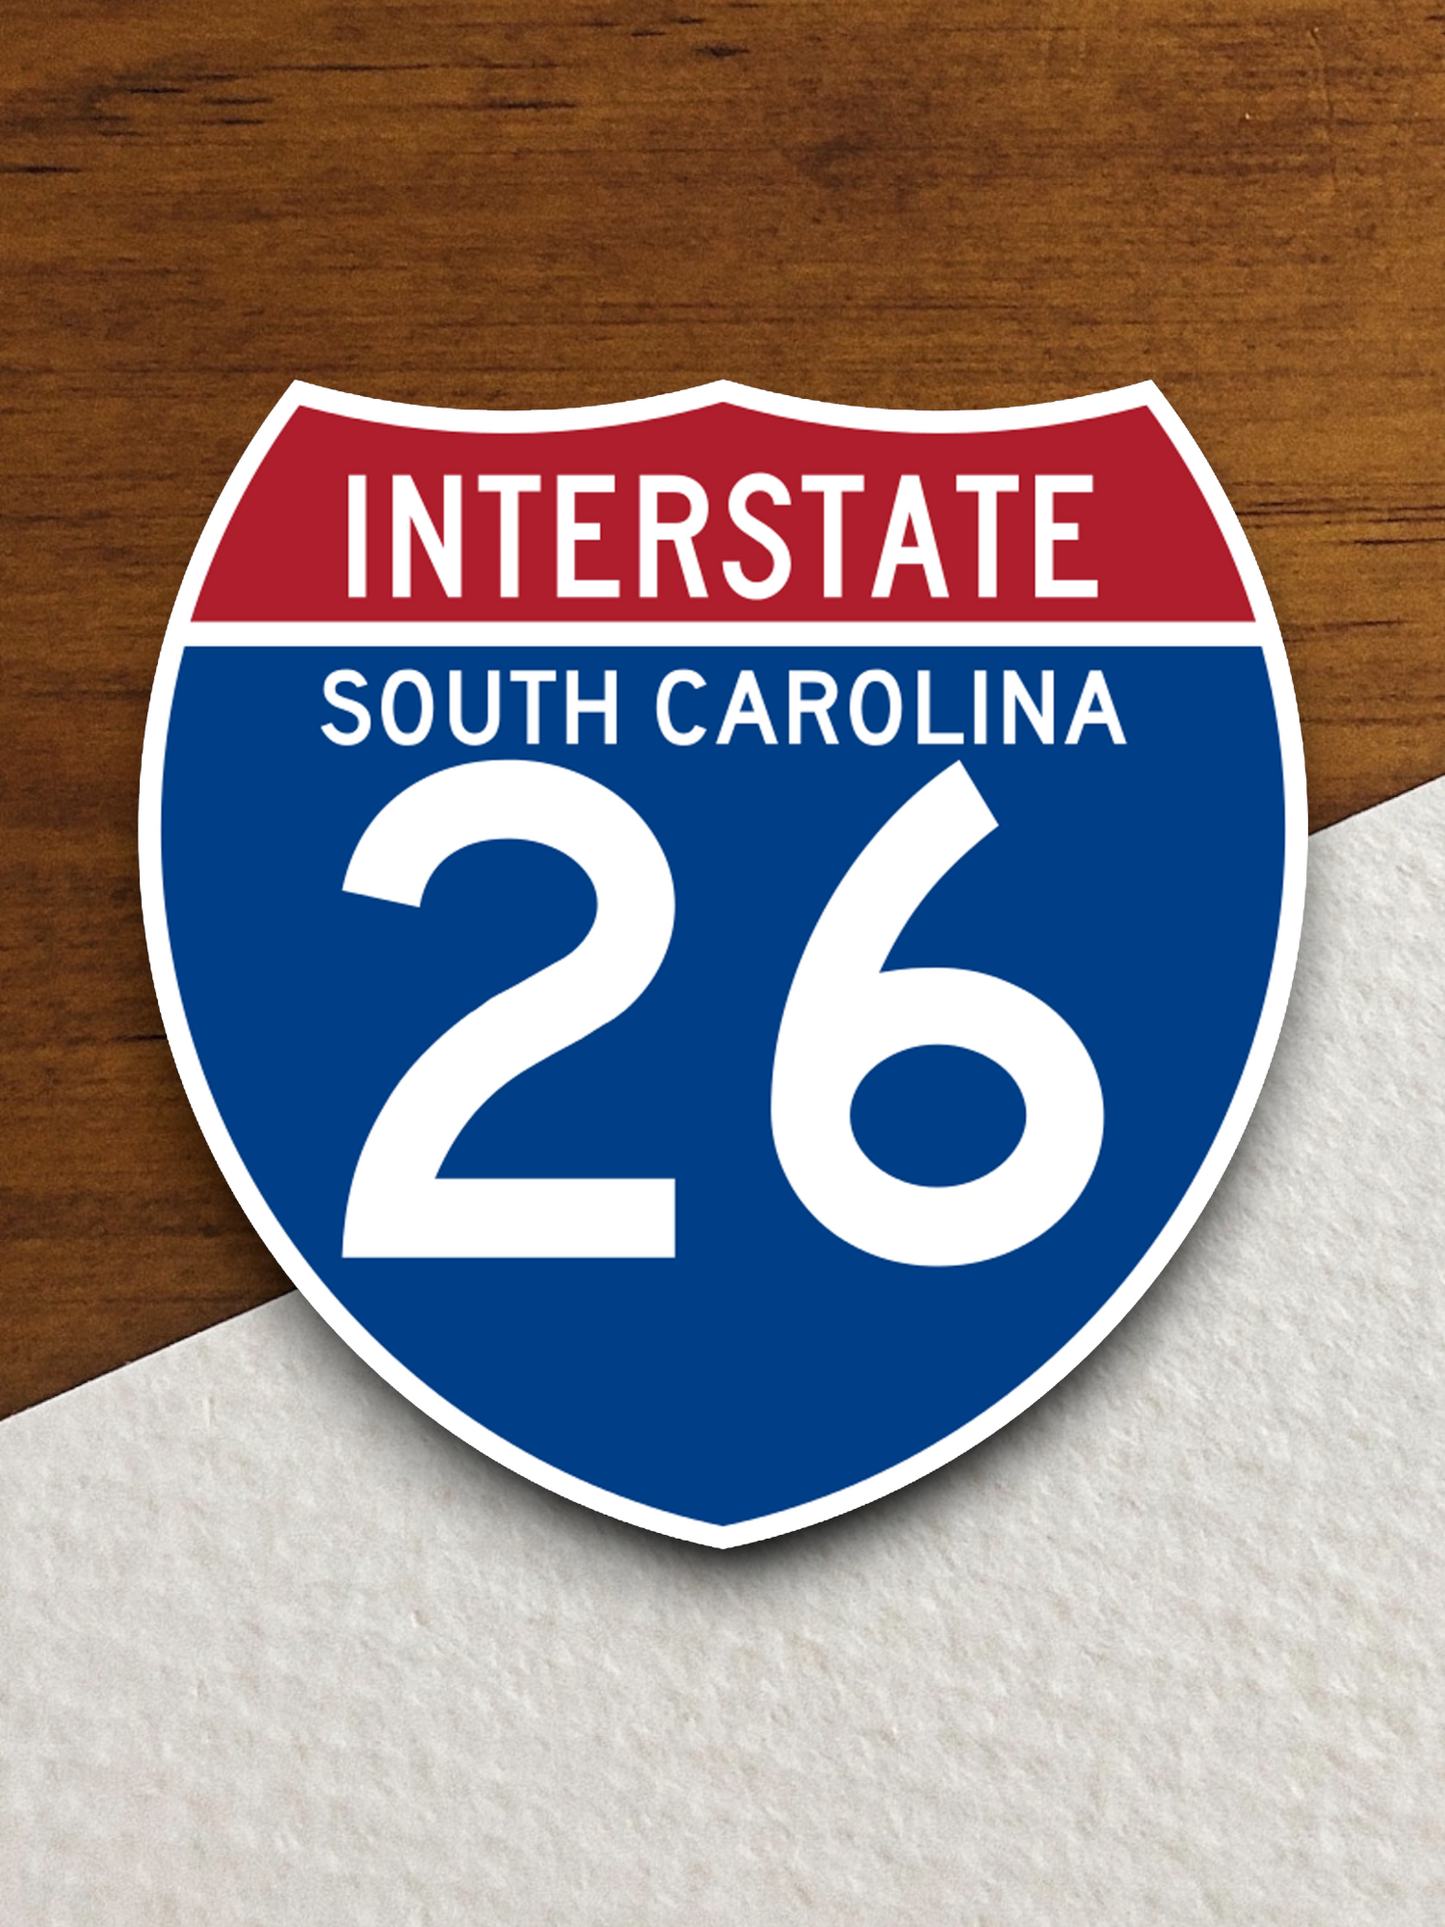 Interstate I-26 South Carolina - Road Sign Sticker